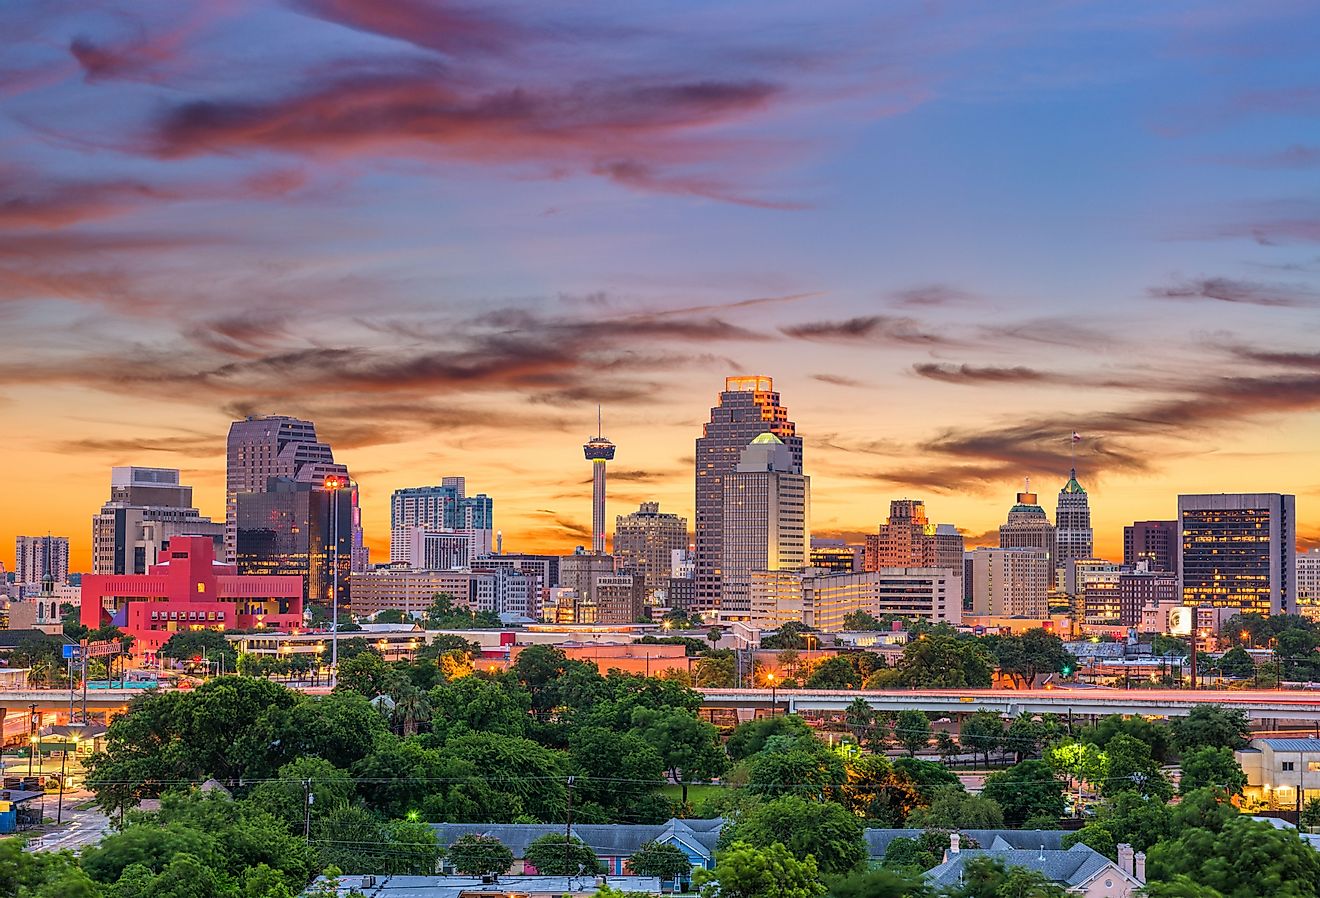 Beautiful San Antonio, Texas downtown skyline at dusk. Image credit Sean Pavone via Shutterstock.